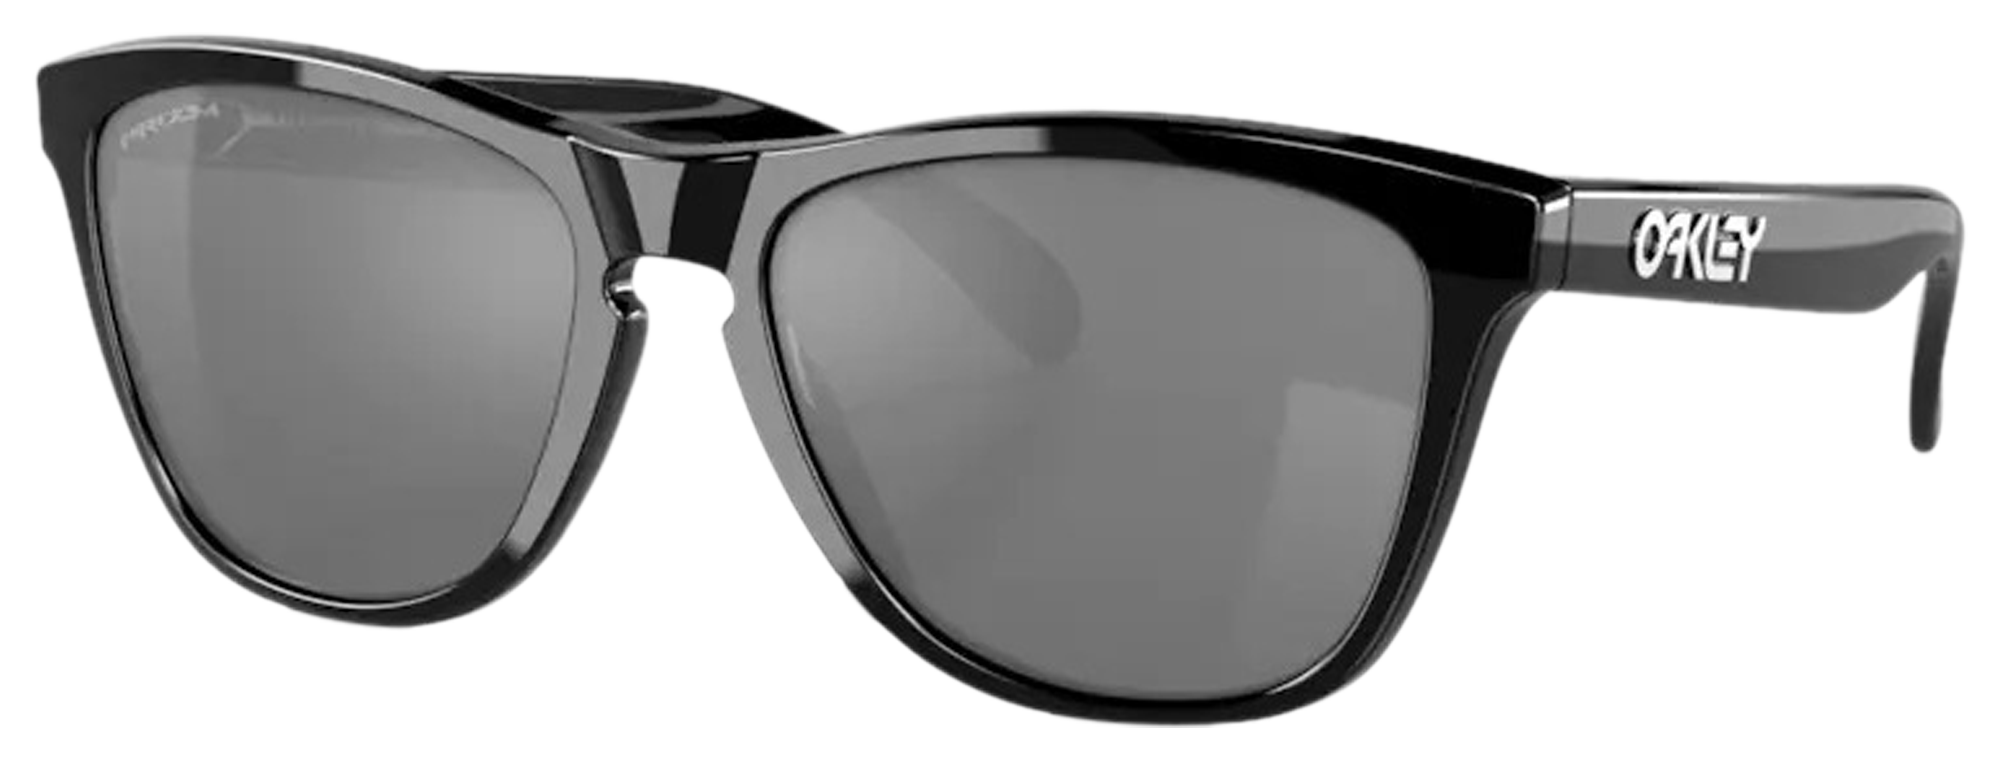 Oakley Frogskins Sunglasses - Men's